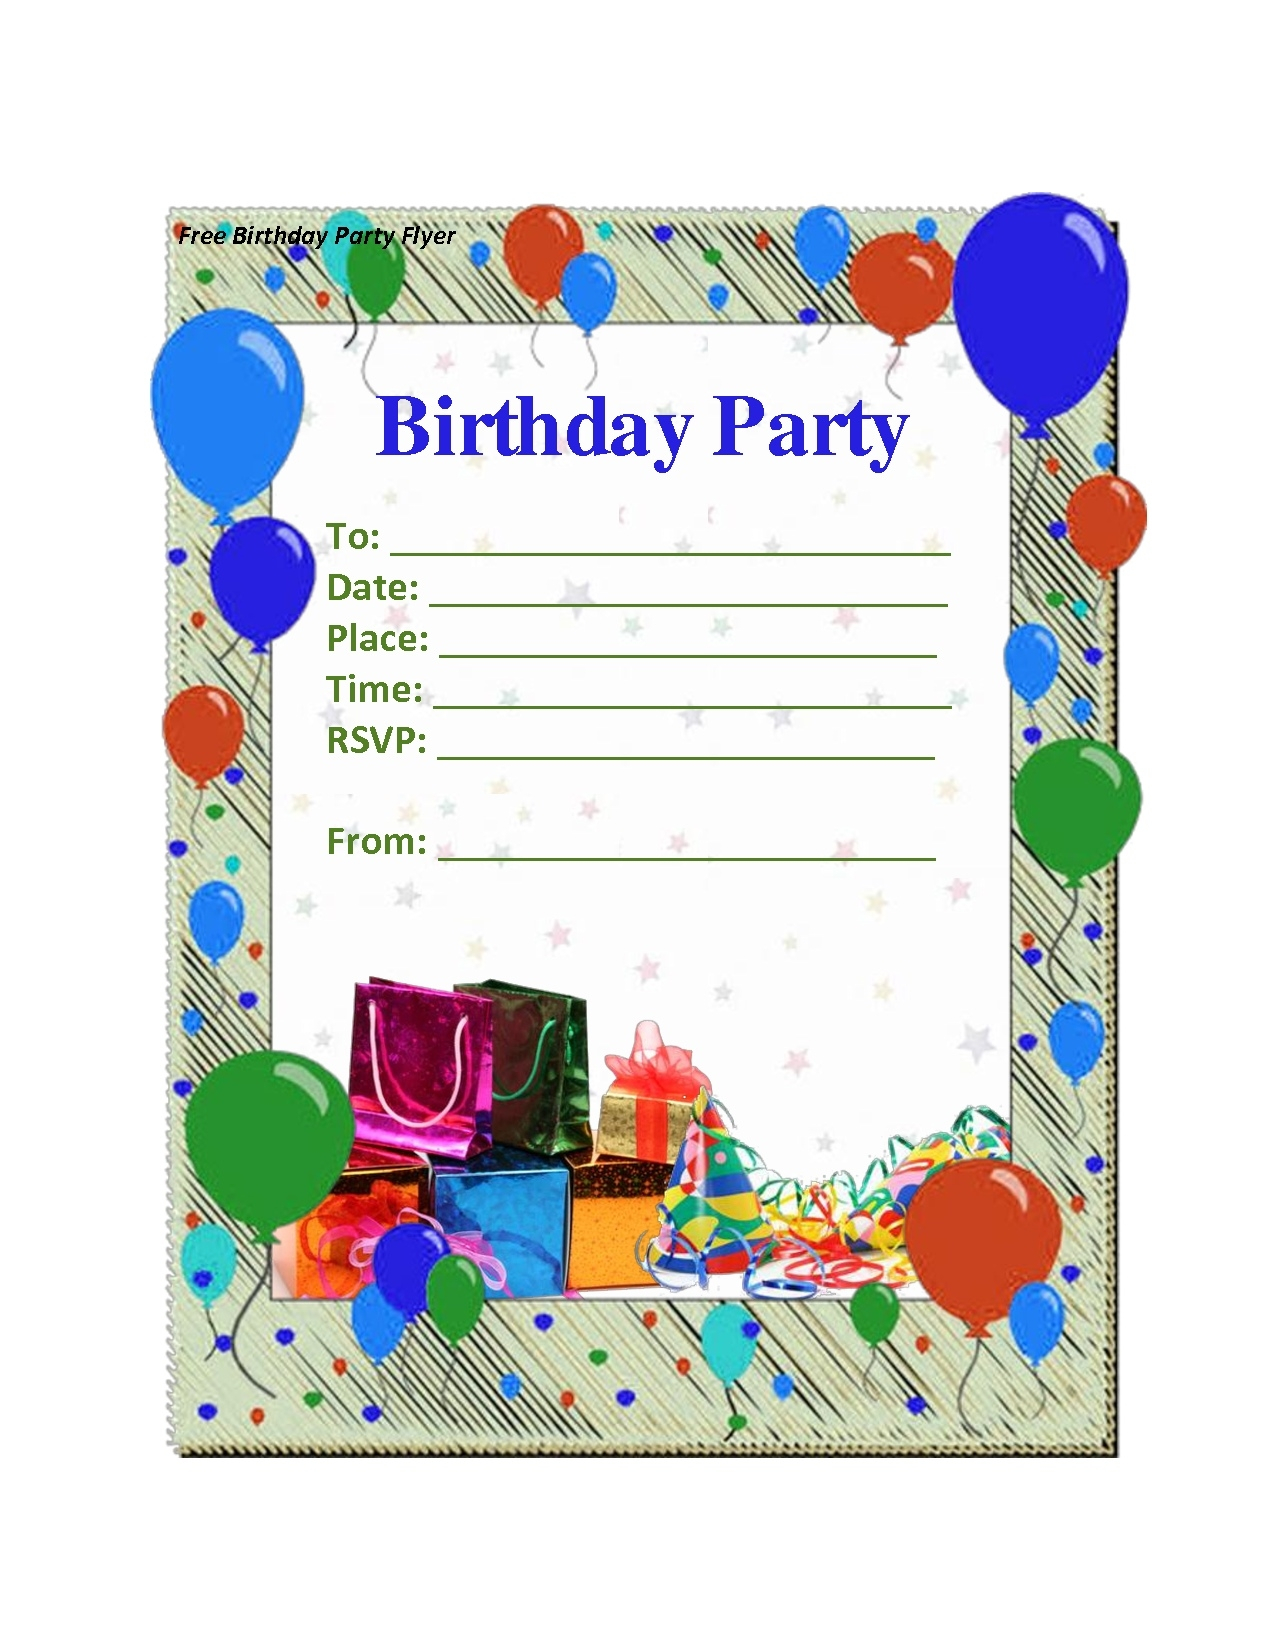 Birthday Card Invitations Templates Birthday Invitation Examples pertaining to size 1275 X 1650